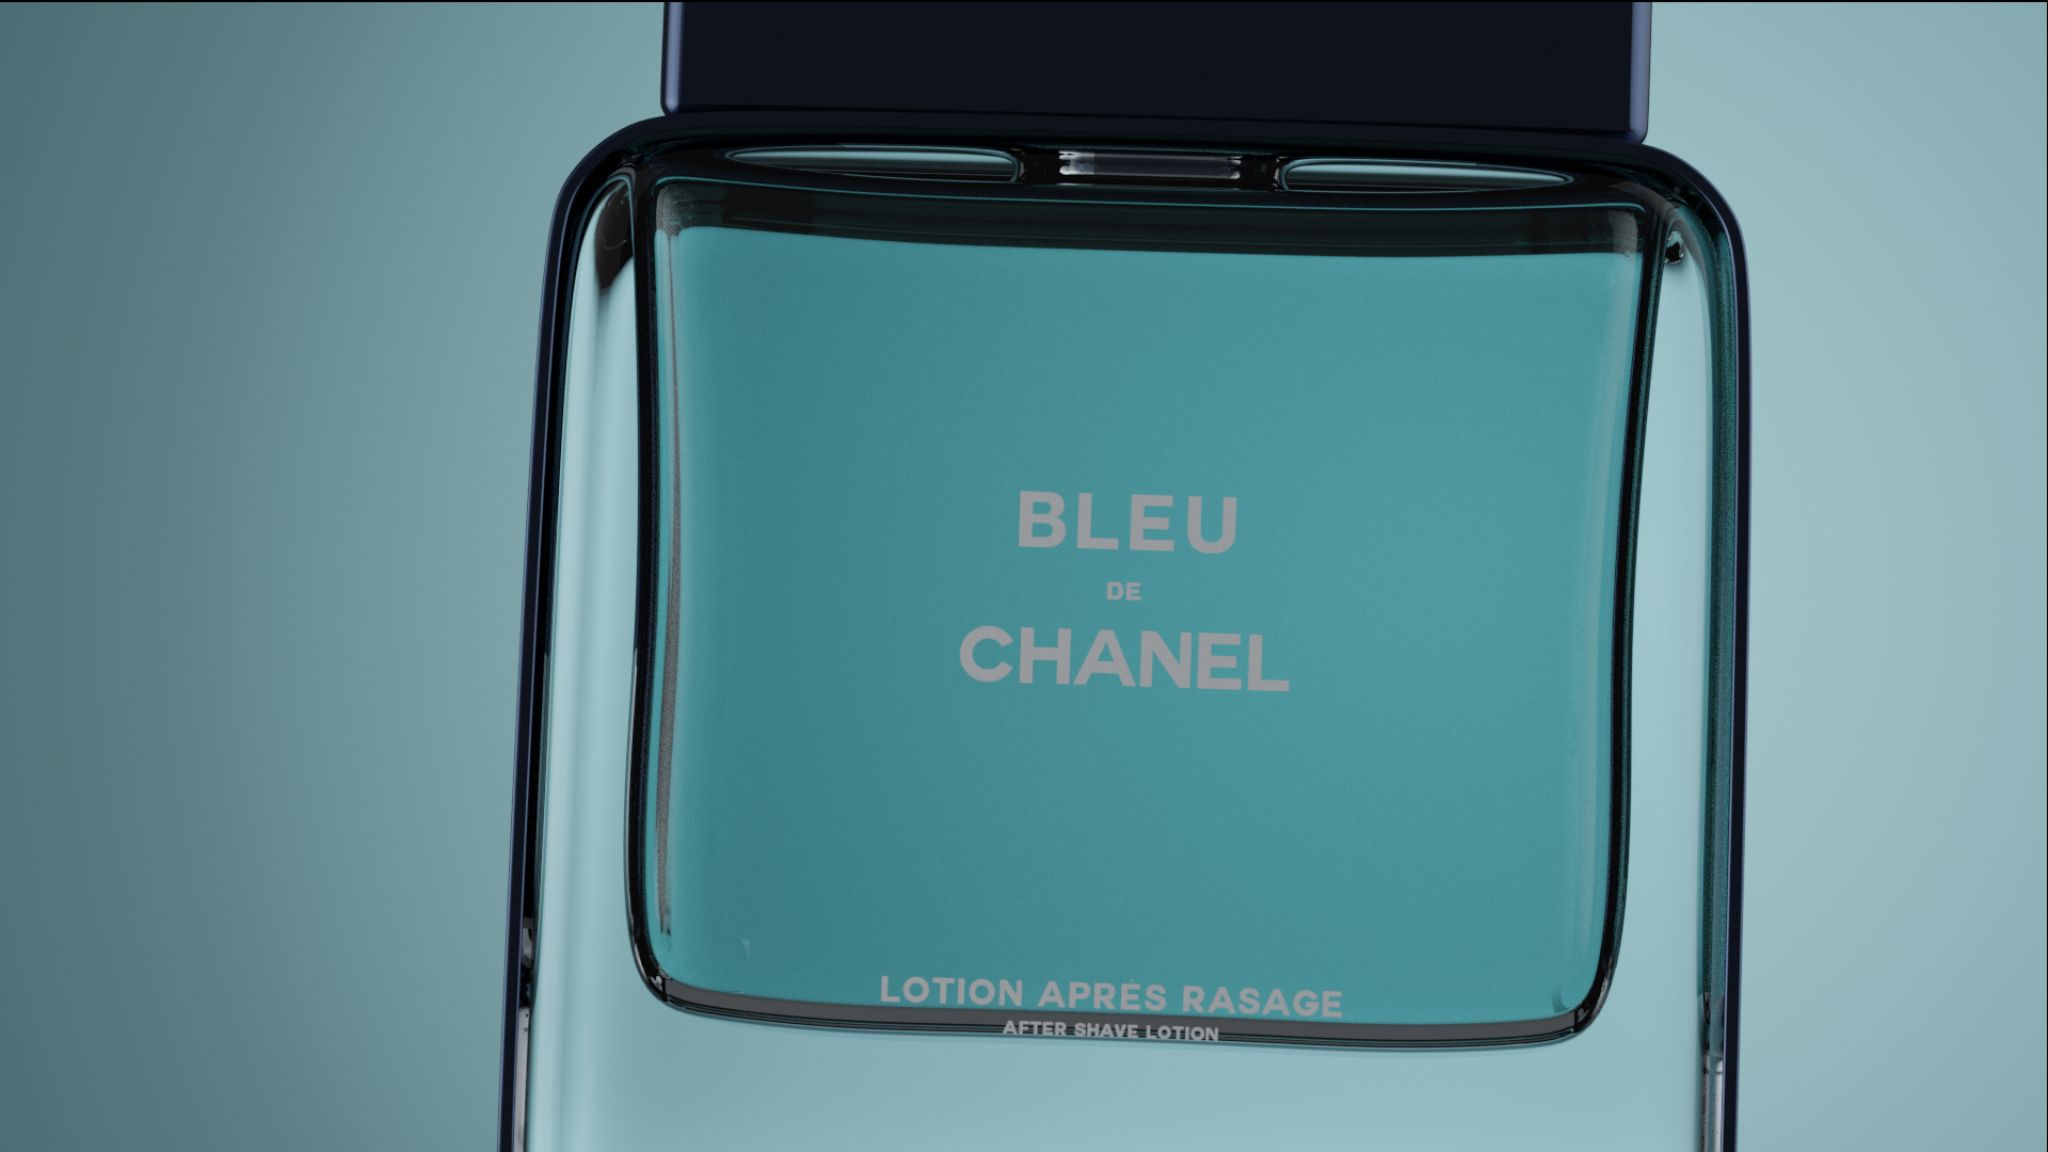 Bleu de Chanel After shave lotion on display